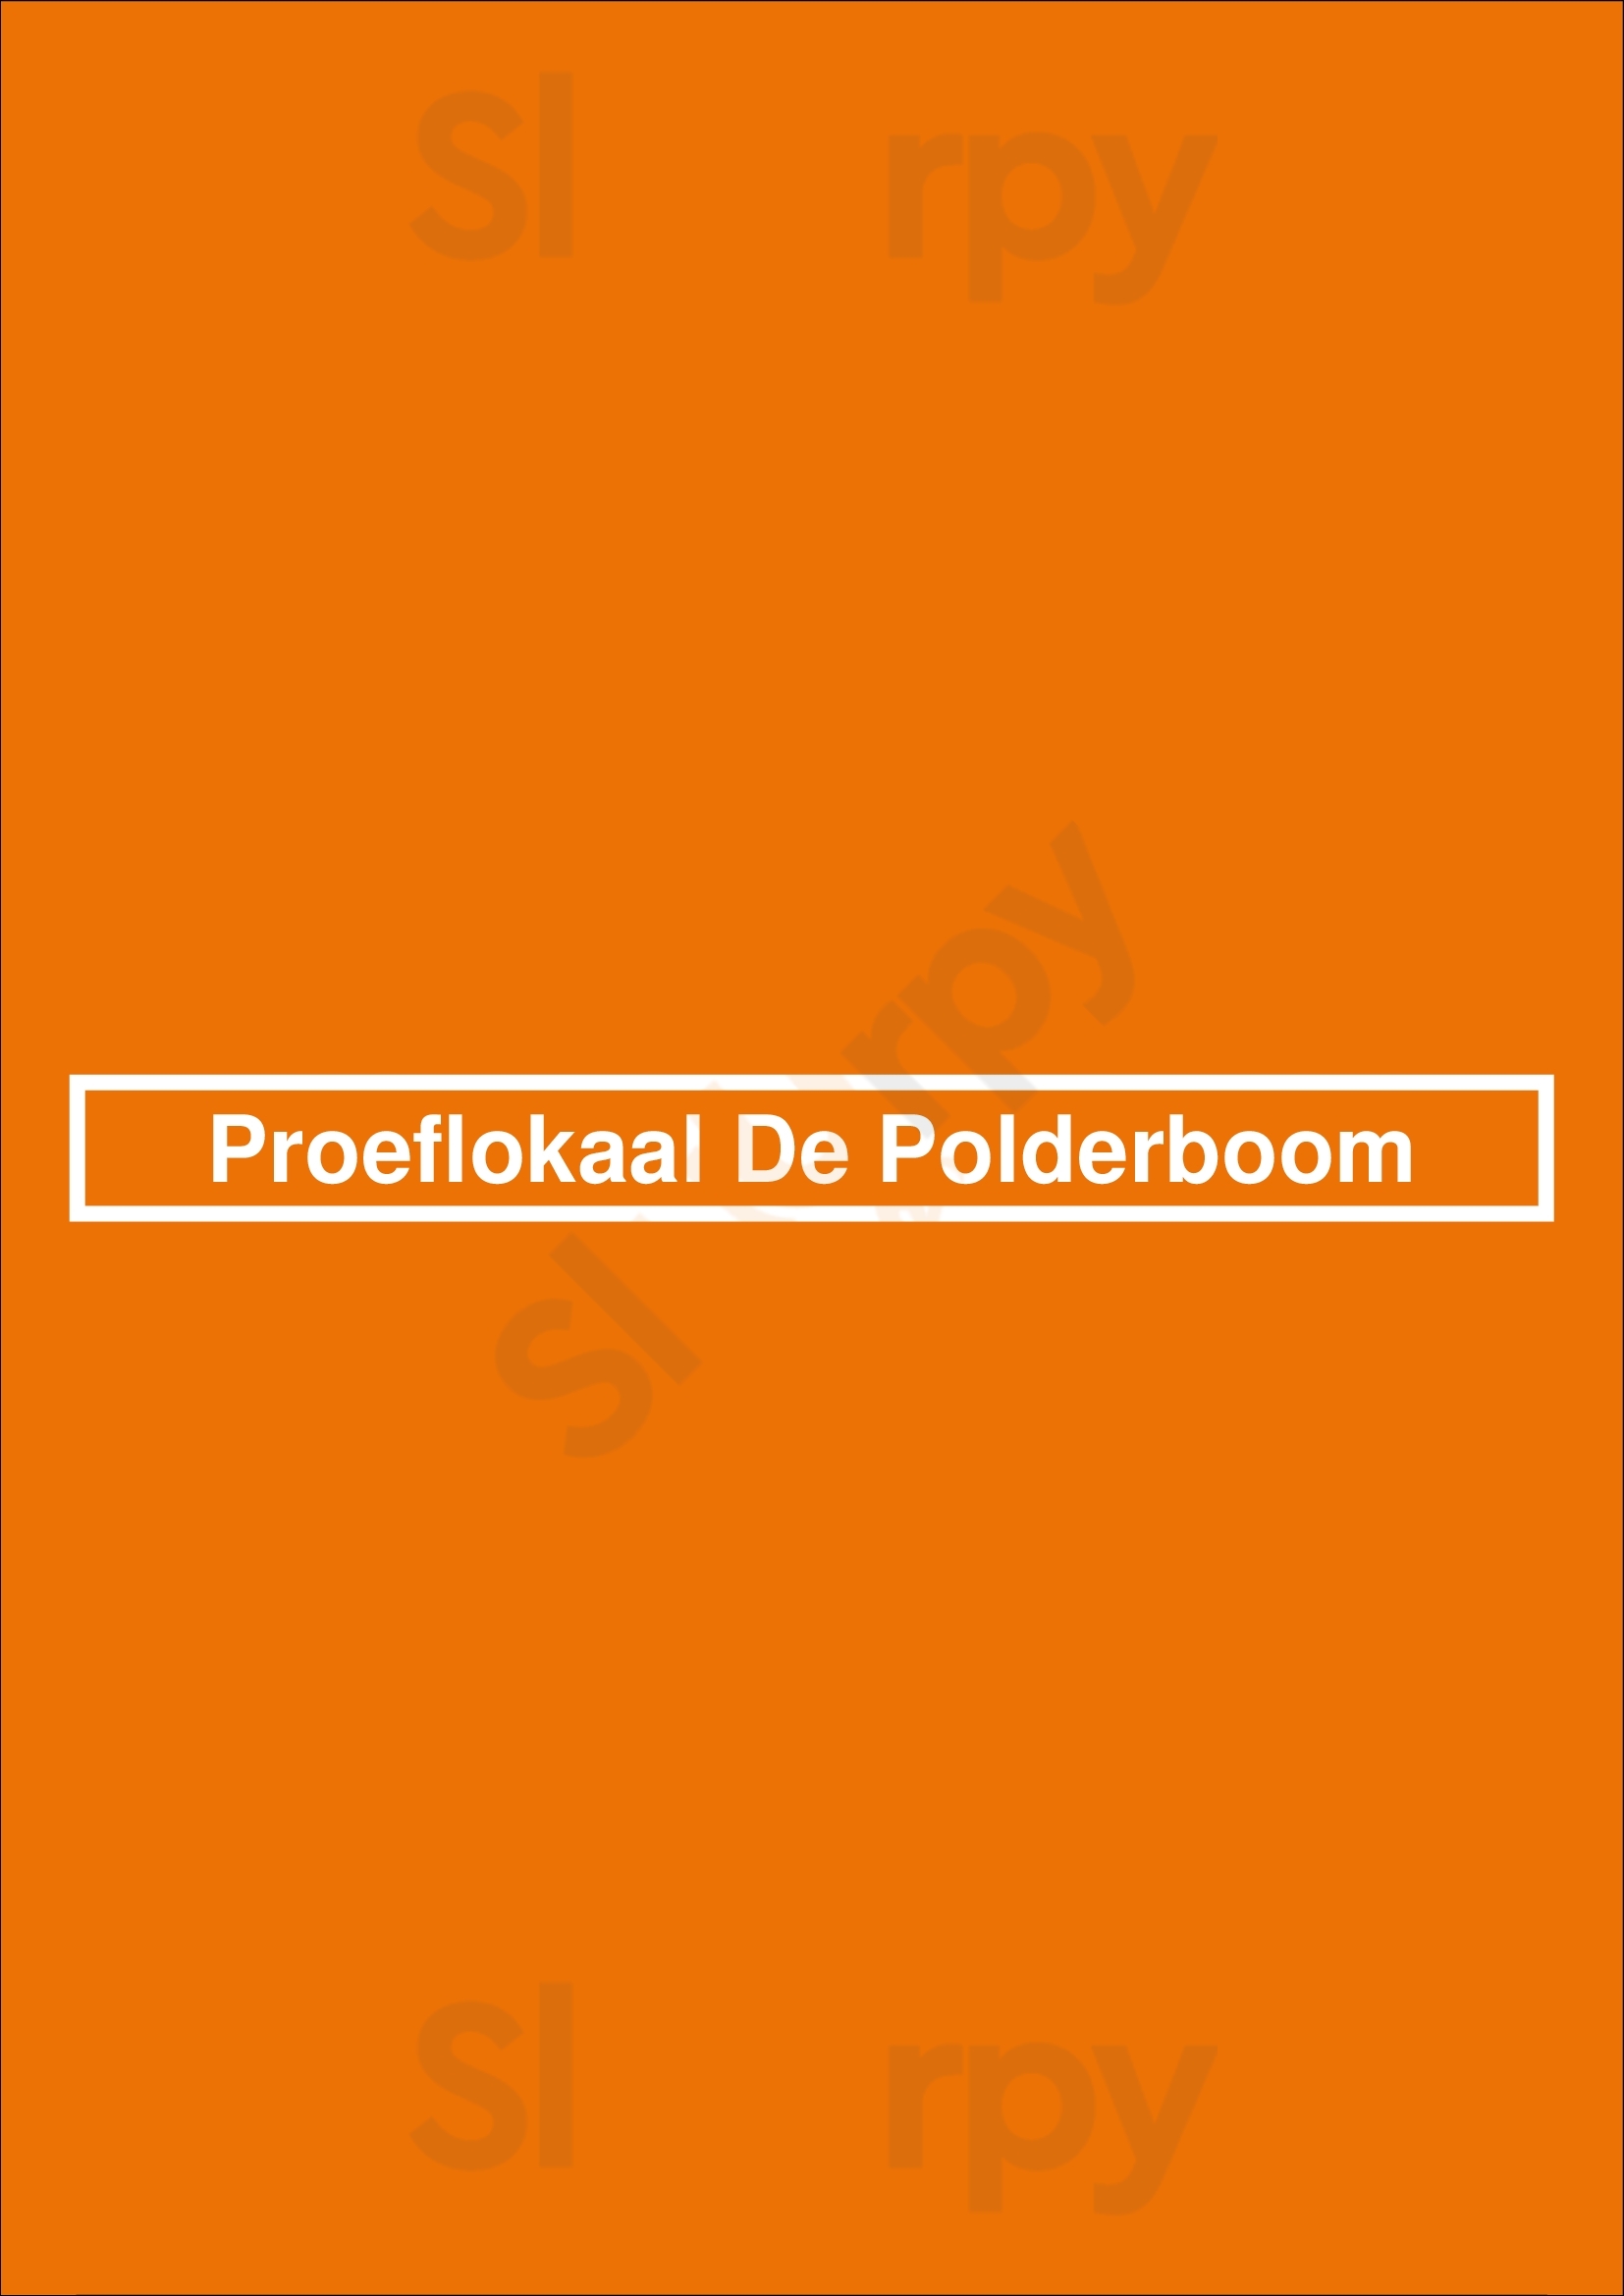 Proeflokaal De Polderboom Hoofddorp Menu - 1